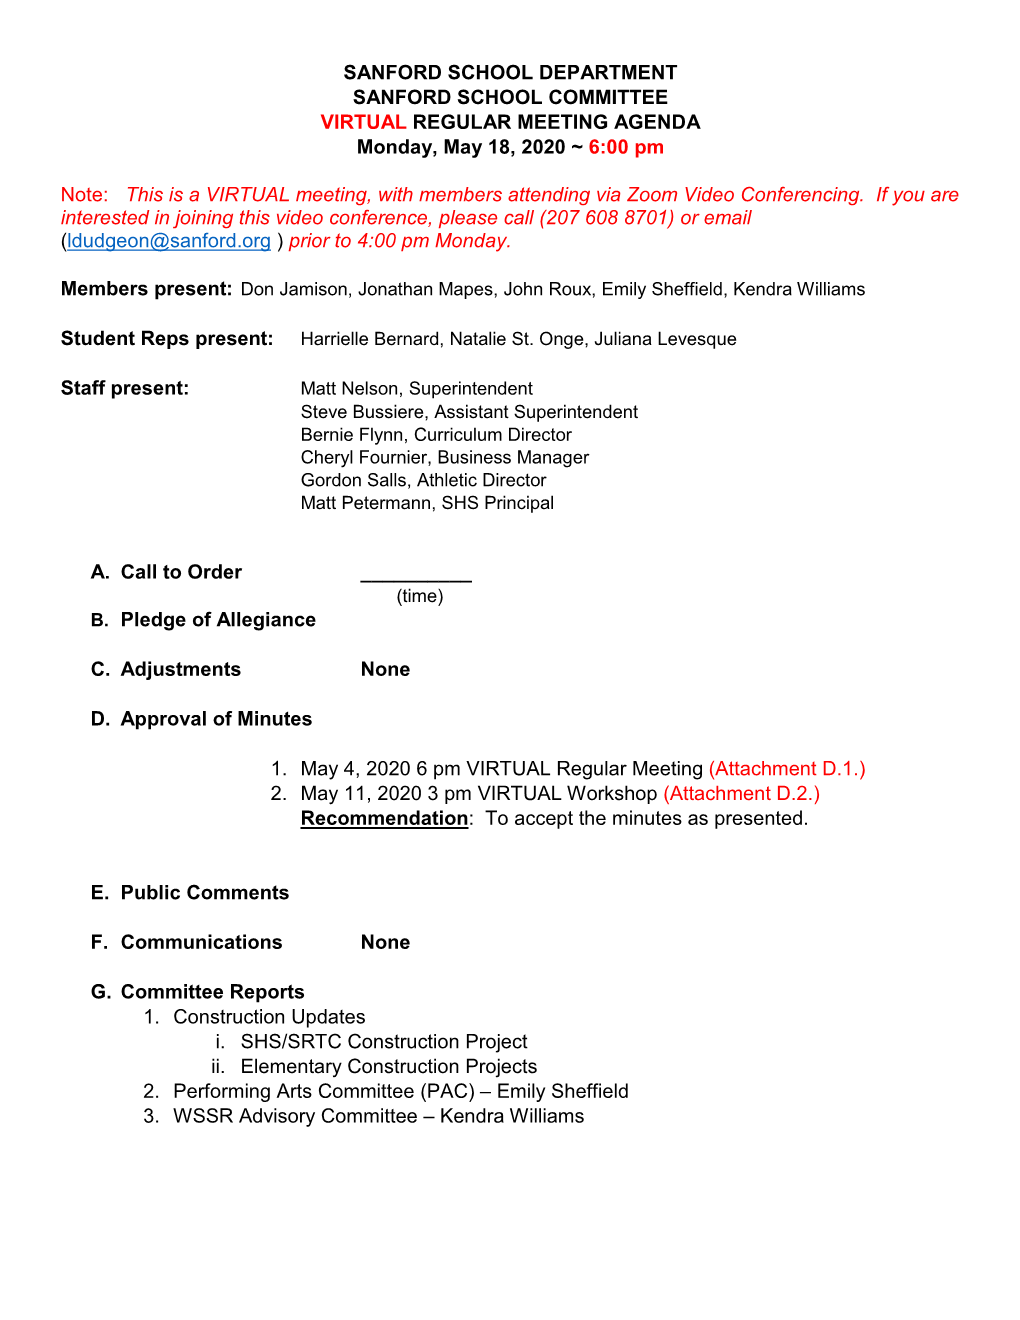 SANFORD SCHOOL DEPARTMENT SANFORD SCHOOL COMMITTEE VIRTUAL REGULAR MEETING AGENDA Monday, May 18, 2020 ~ 6:00 Pm